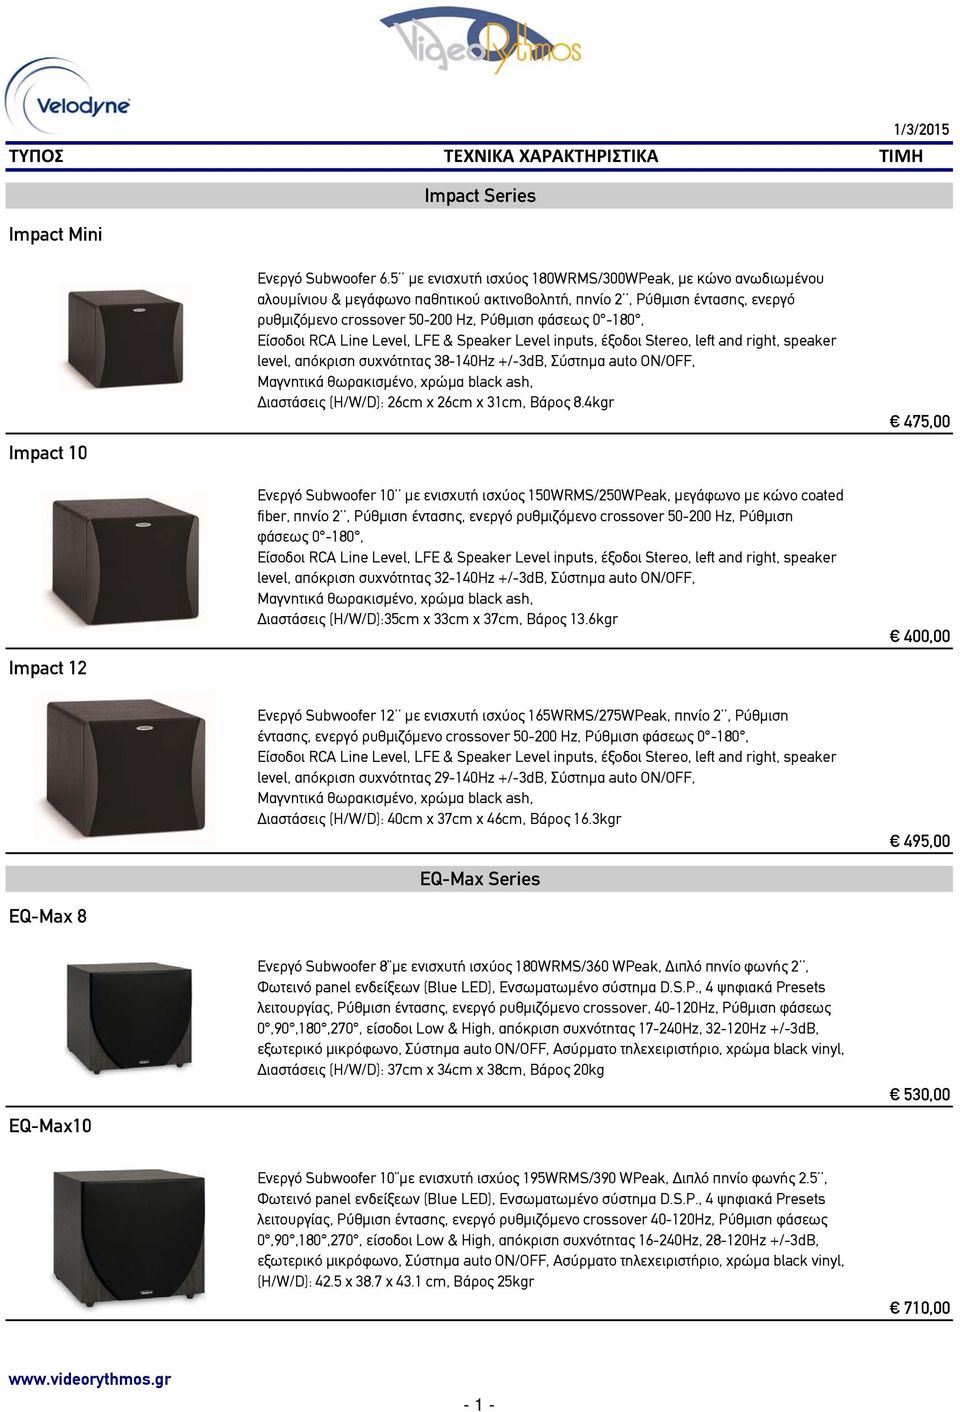 Eίσοδοι RCA Line Level, LFE & Speaker Level inputs, έξοδοι Stereo, left and right, speaker level, απόκριση συχνότητας 38-140Hz +/-3dB, Σύστημα auto ON/OFF, Μαγνητικά θωρακισμένο, χρώμα black ash,